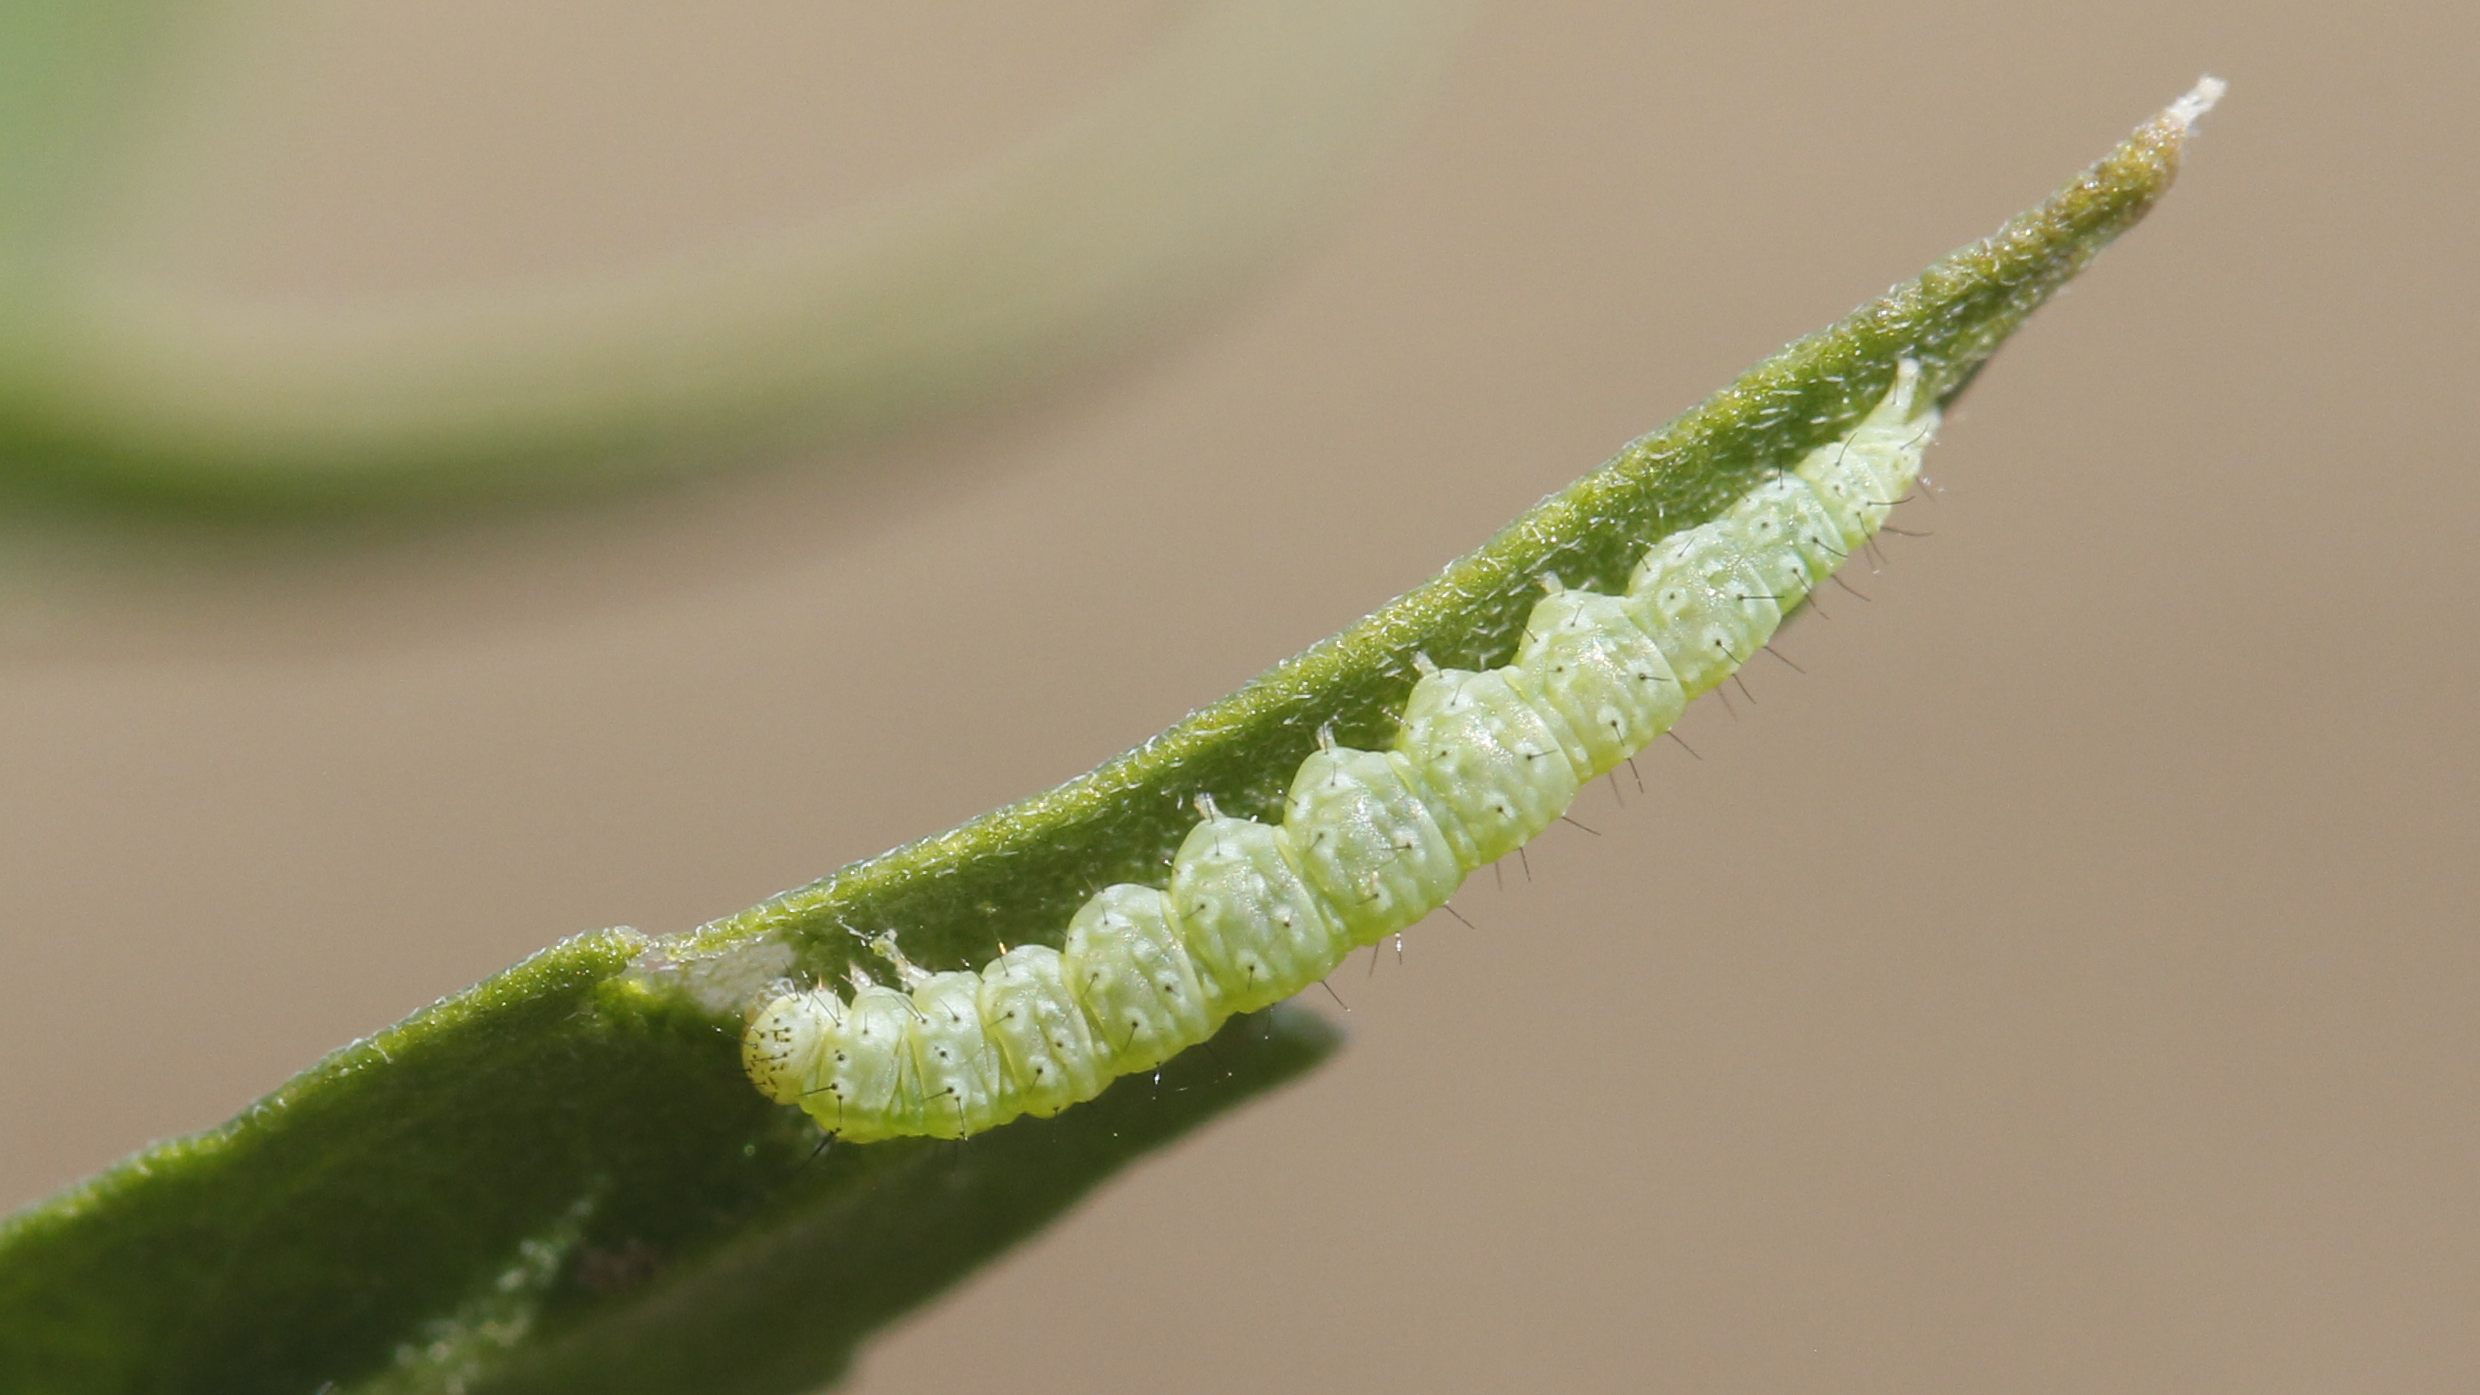 Plutella xylostella larvae feeding on a plant